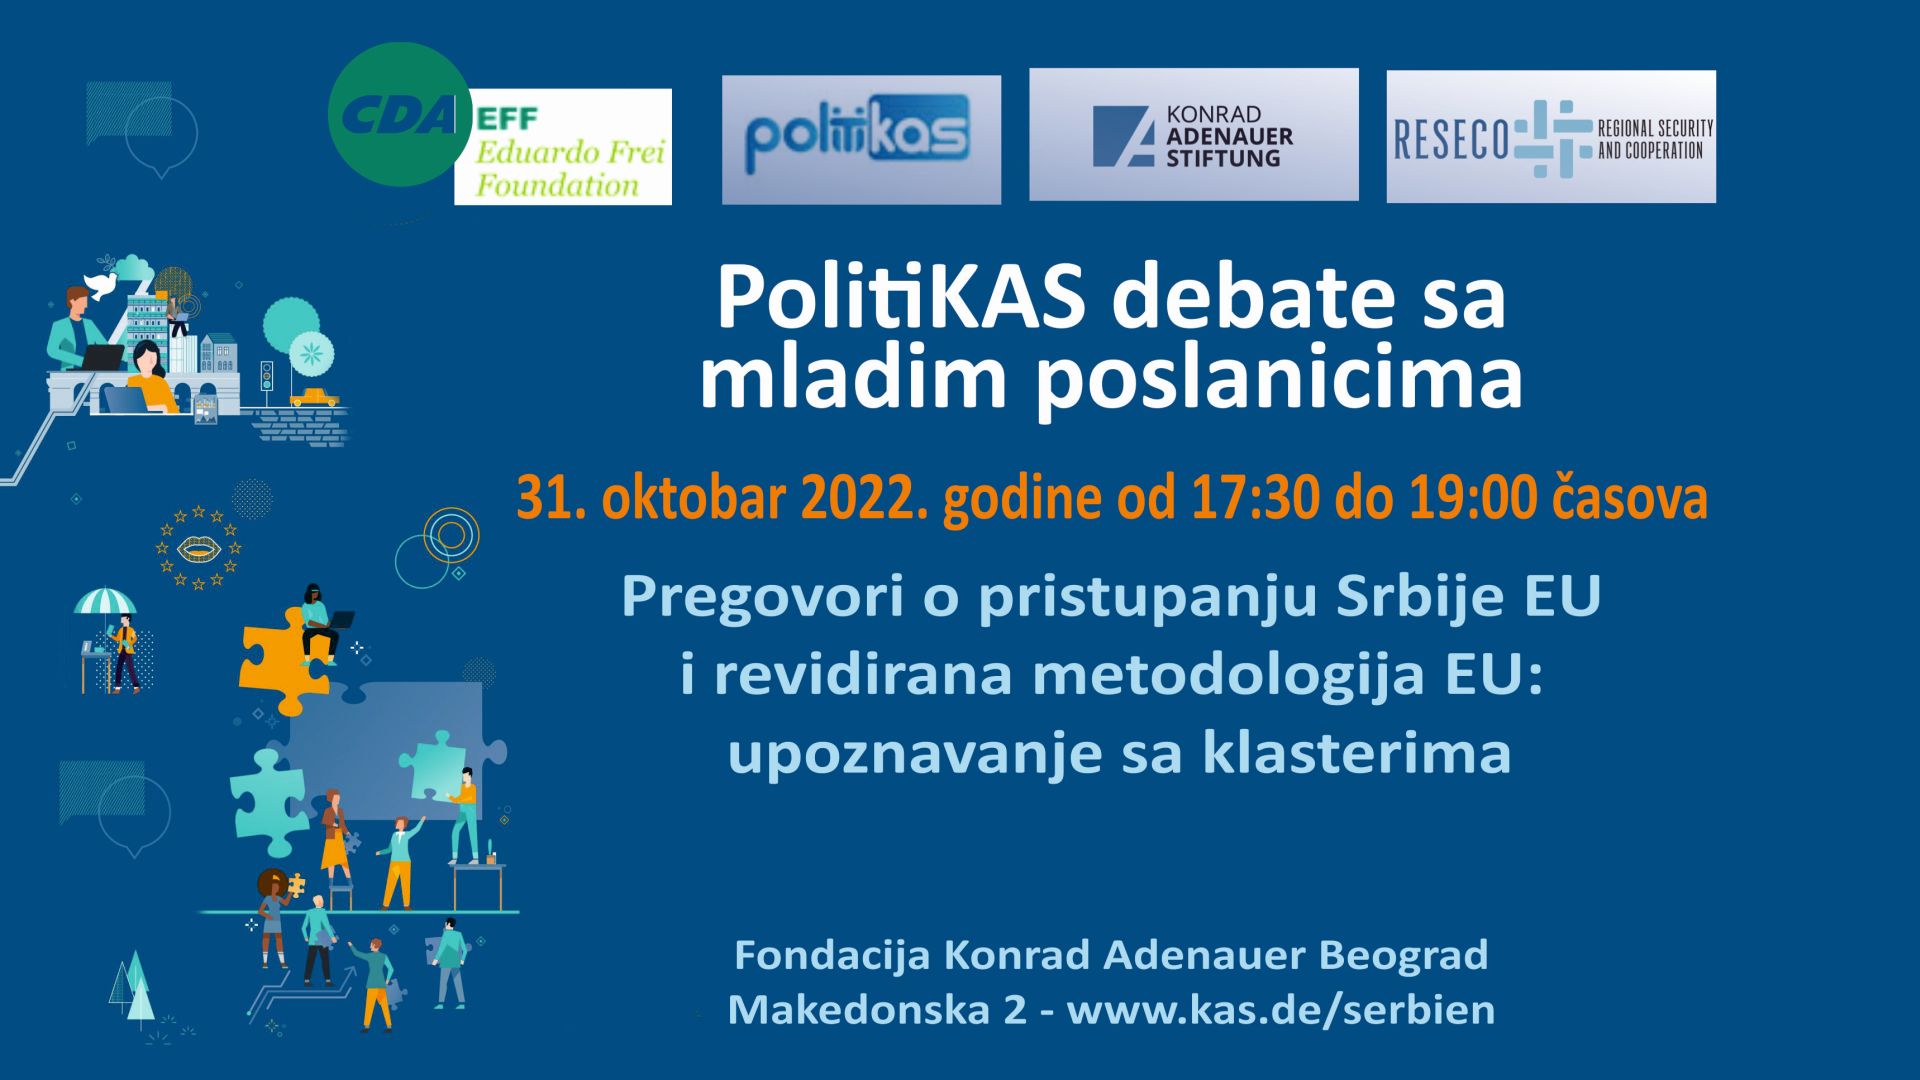 You are currently viewing PolitiKAS debate: Pregovori o pristupanju Srbije EU i revidirana metodologija – upoznavanje sa klasterima